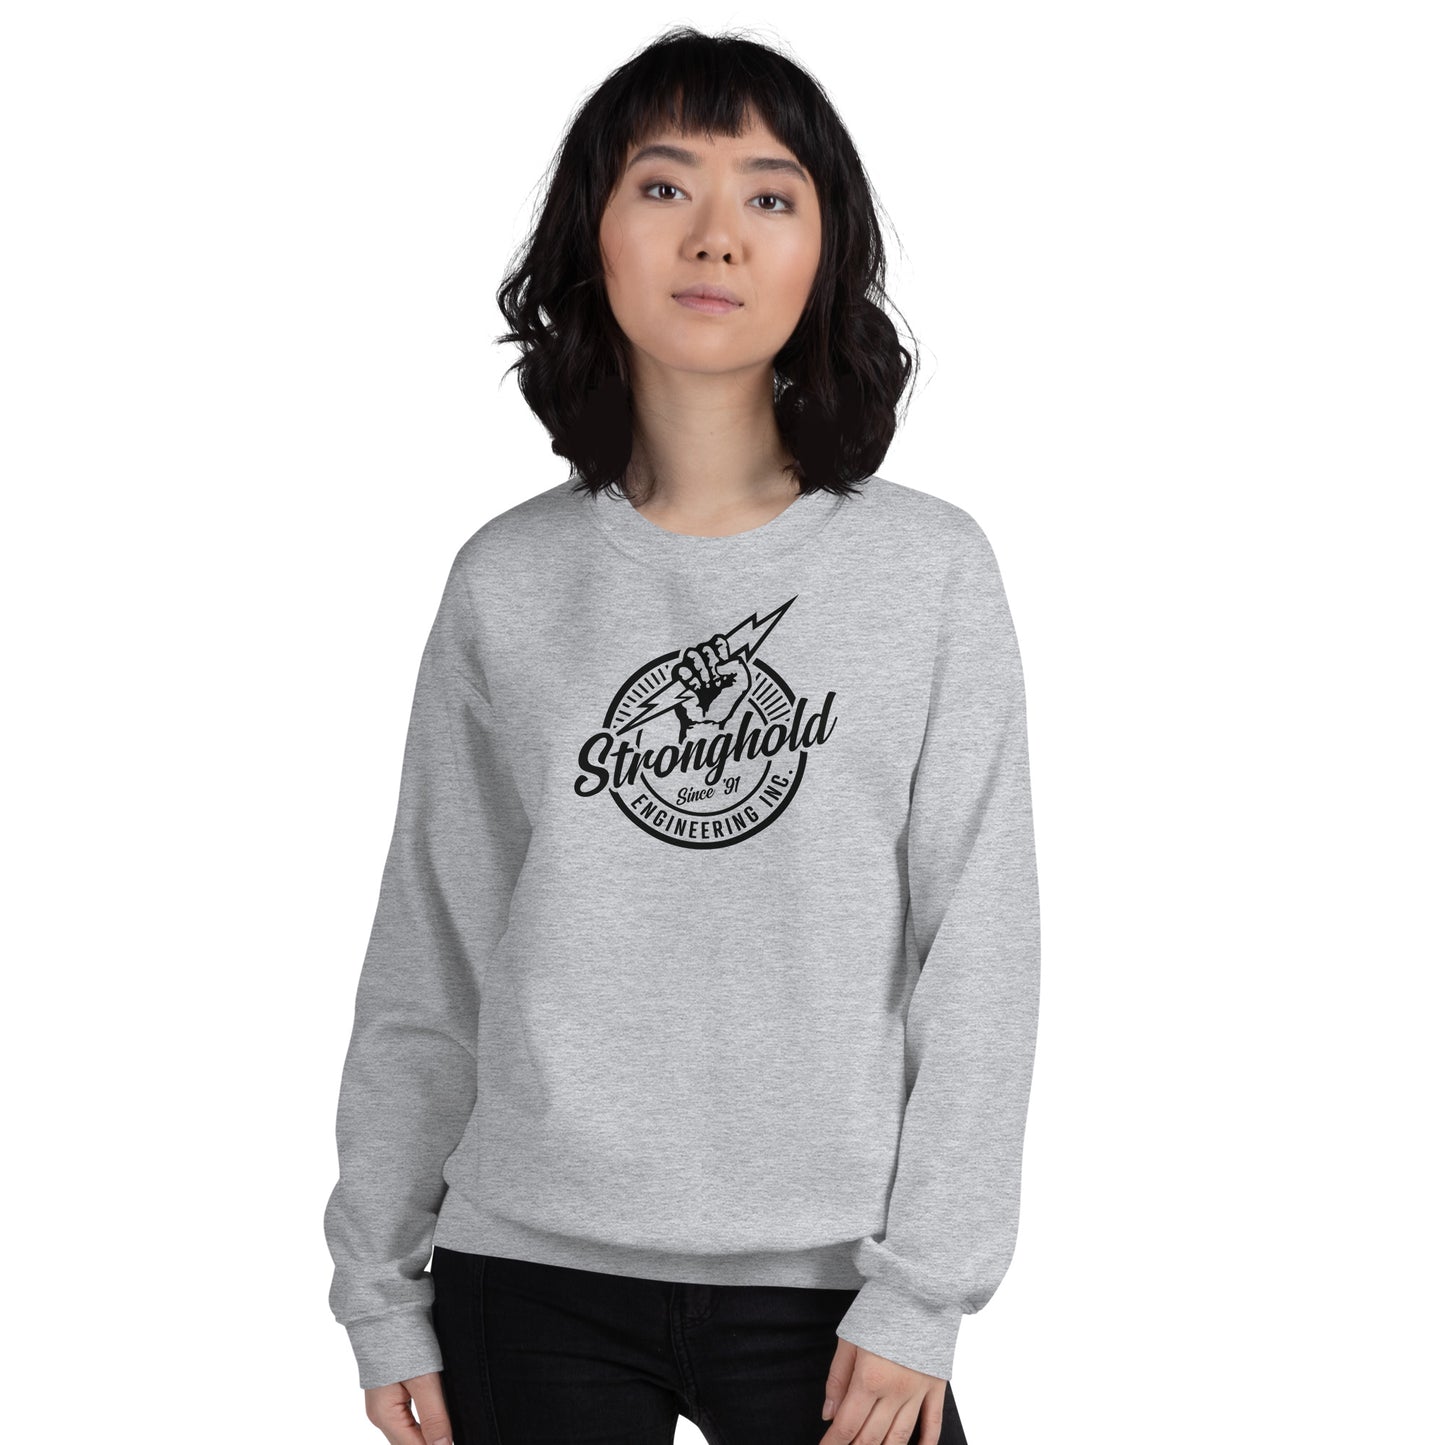 Unisex Value Sweatshirt